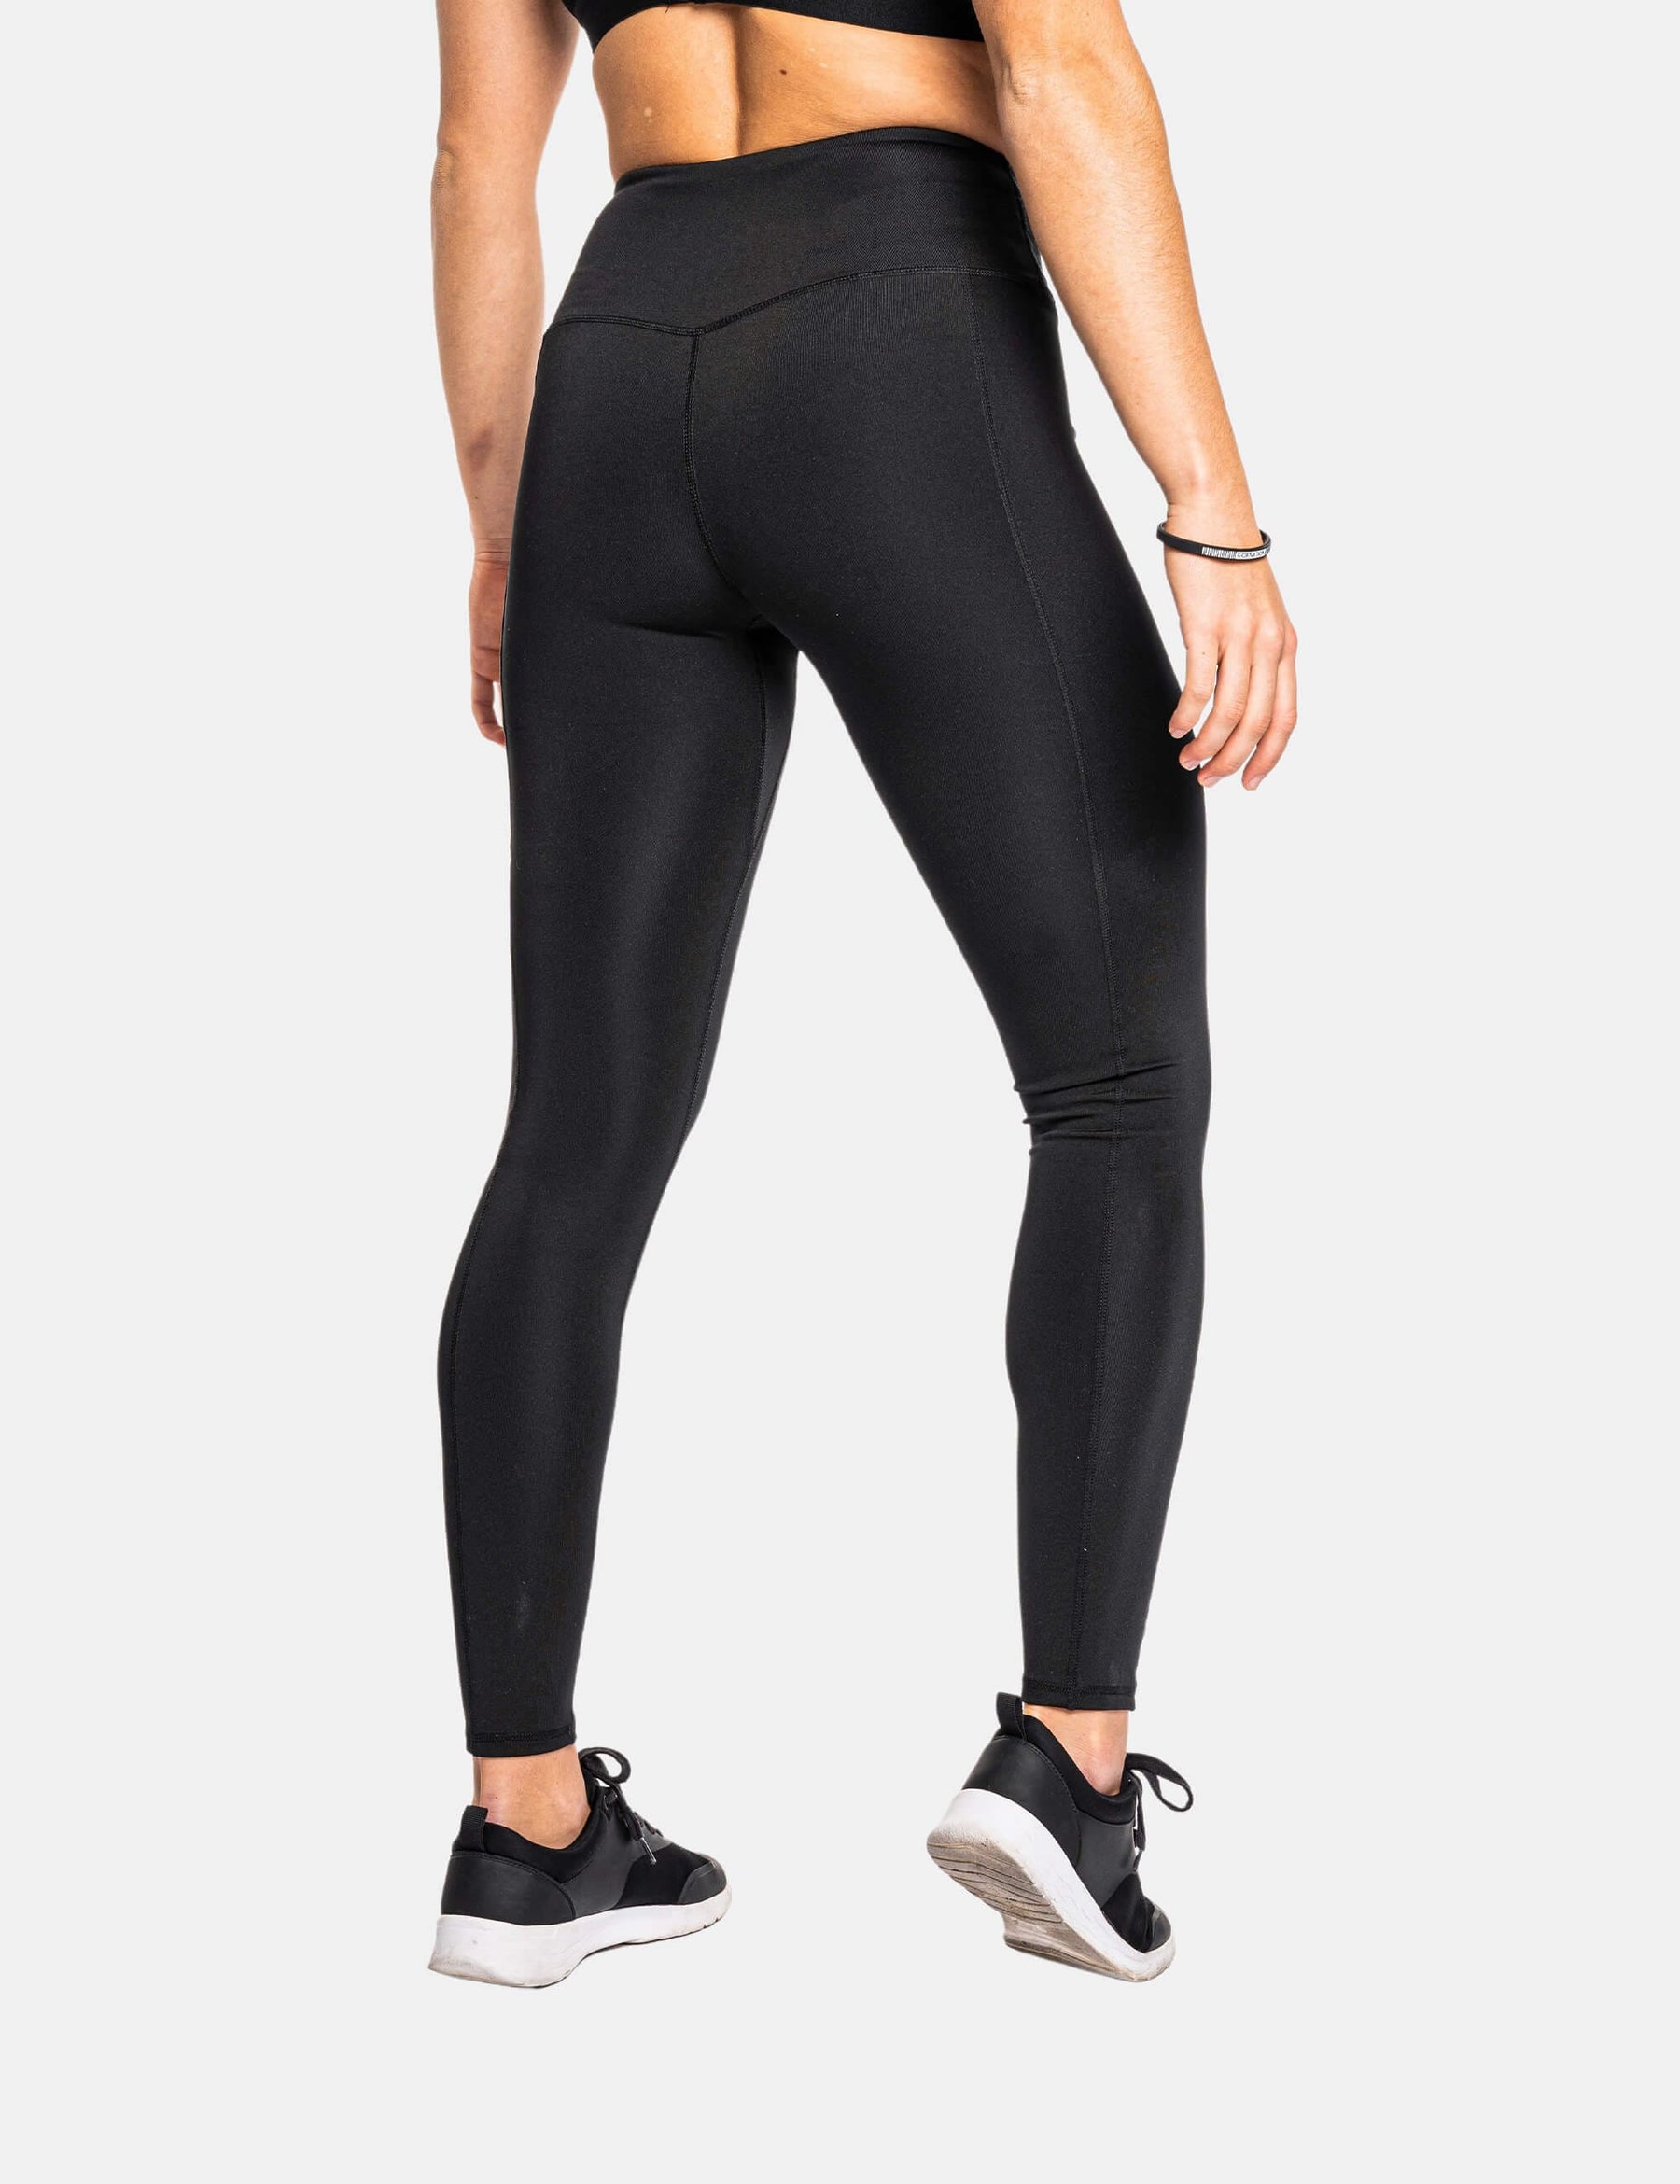 product photo of black calisthenics leggings. Backside